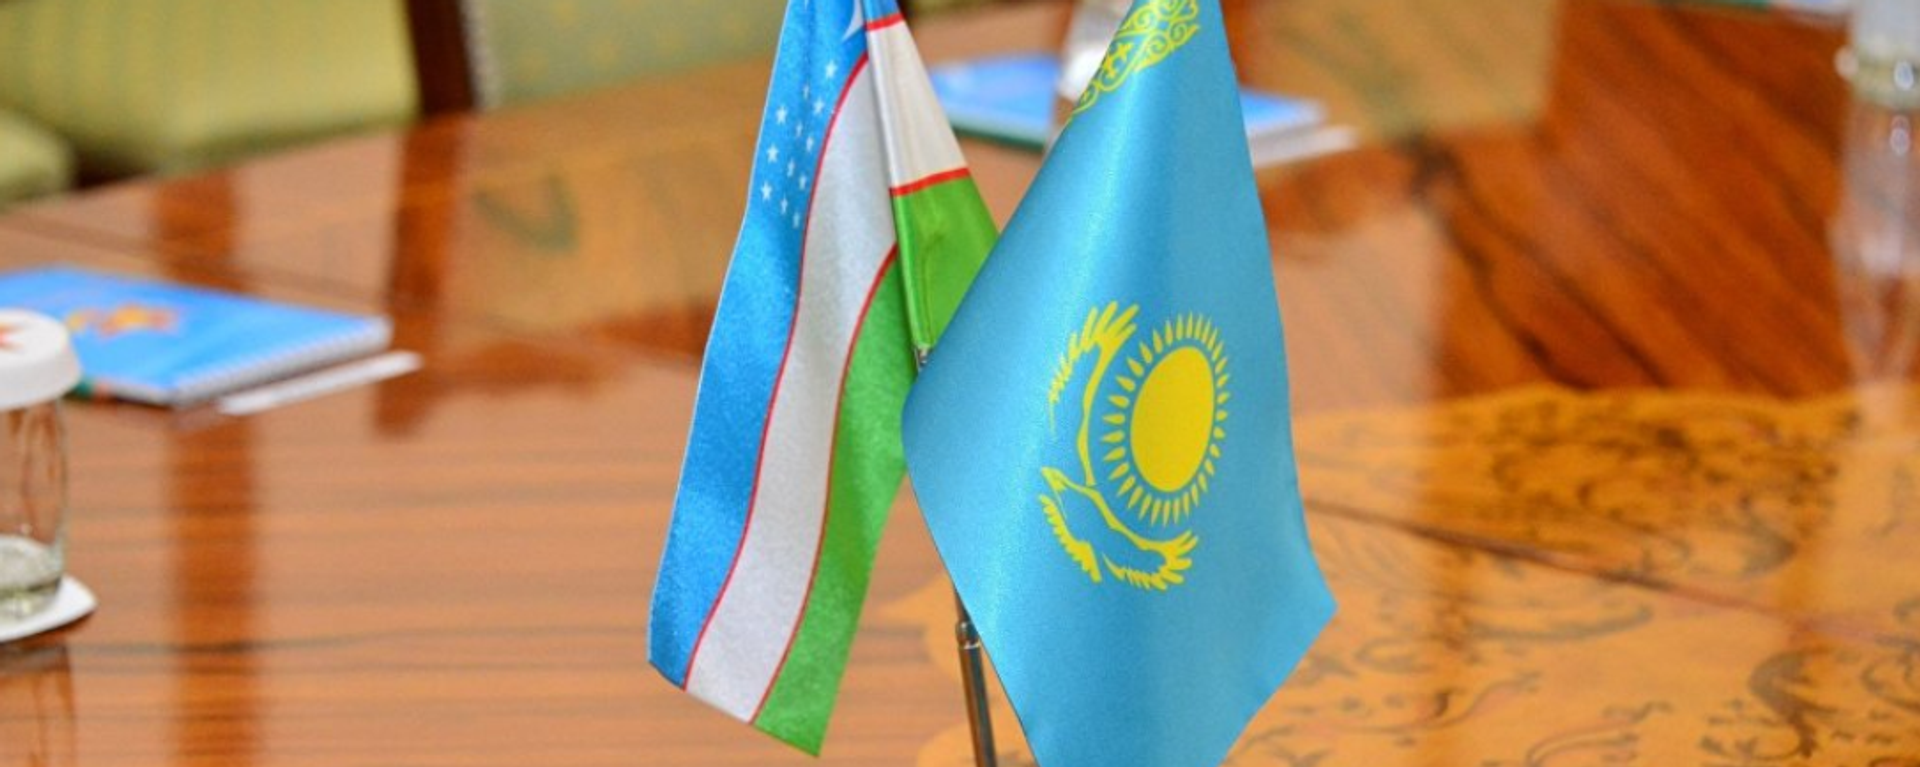 Флаги Узбекистана и Казахстана - Sputnik Ўзбекистон, 1920, 20.12.2018